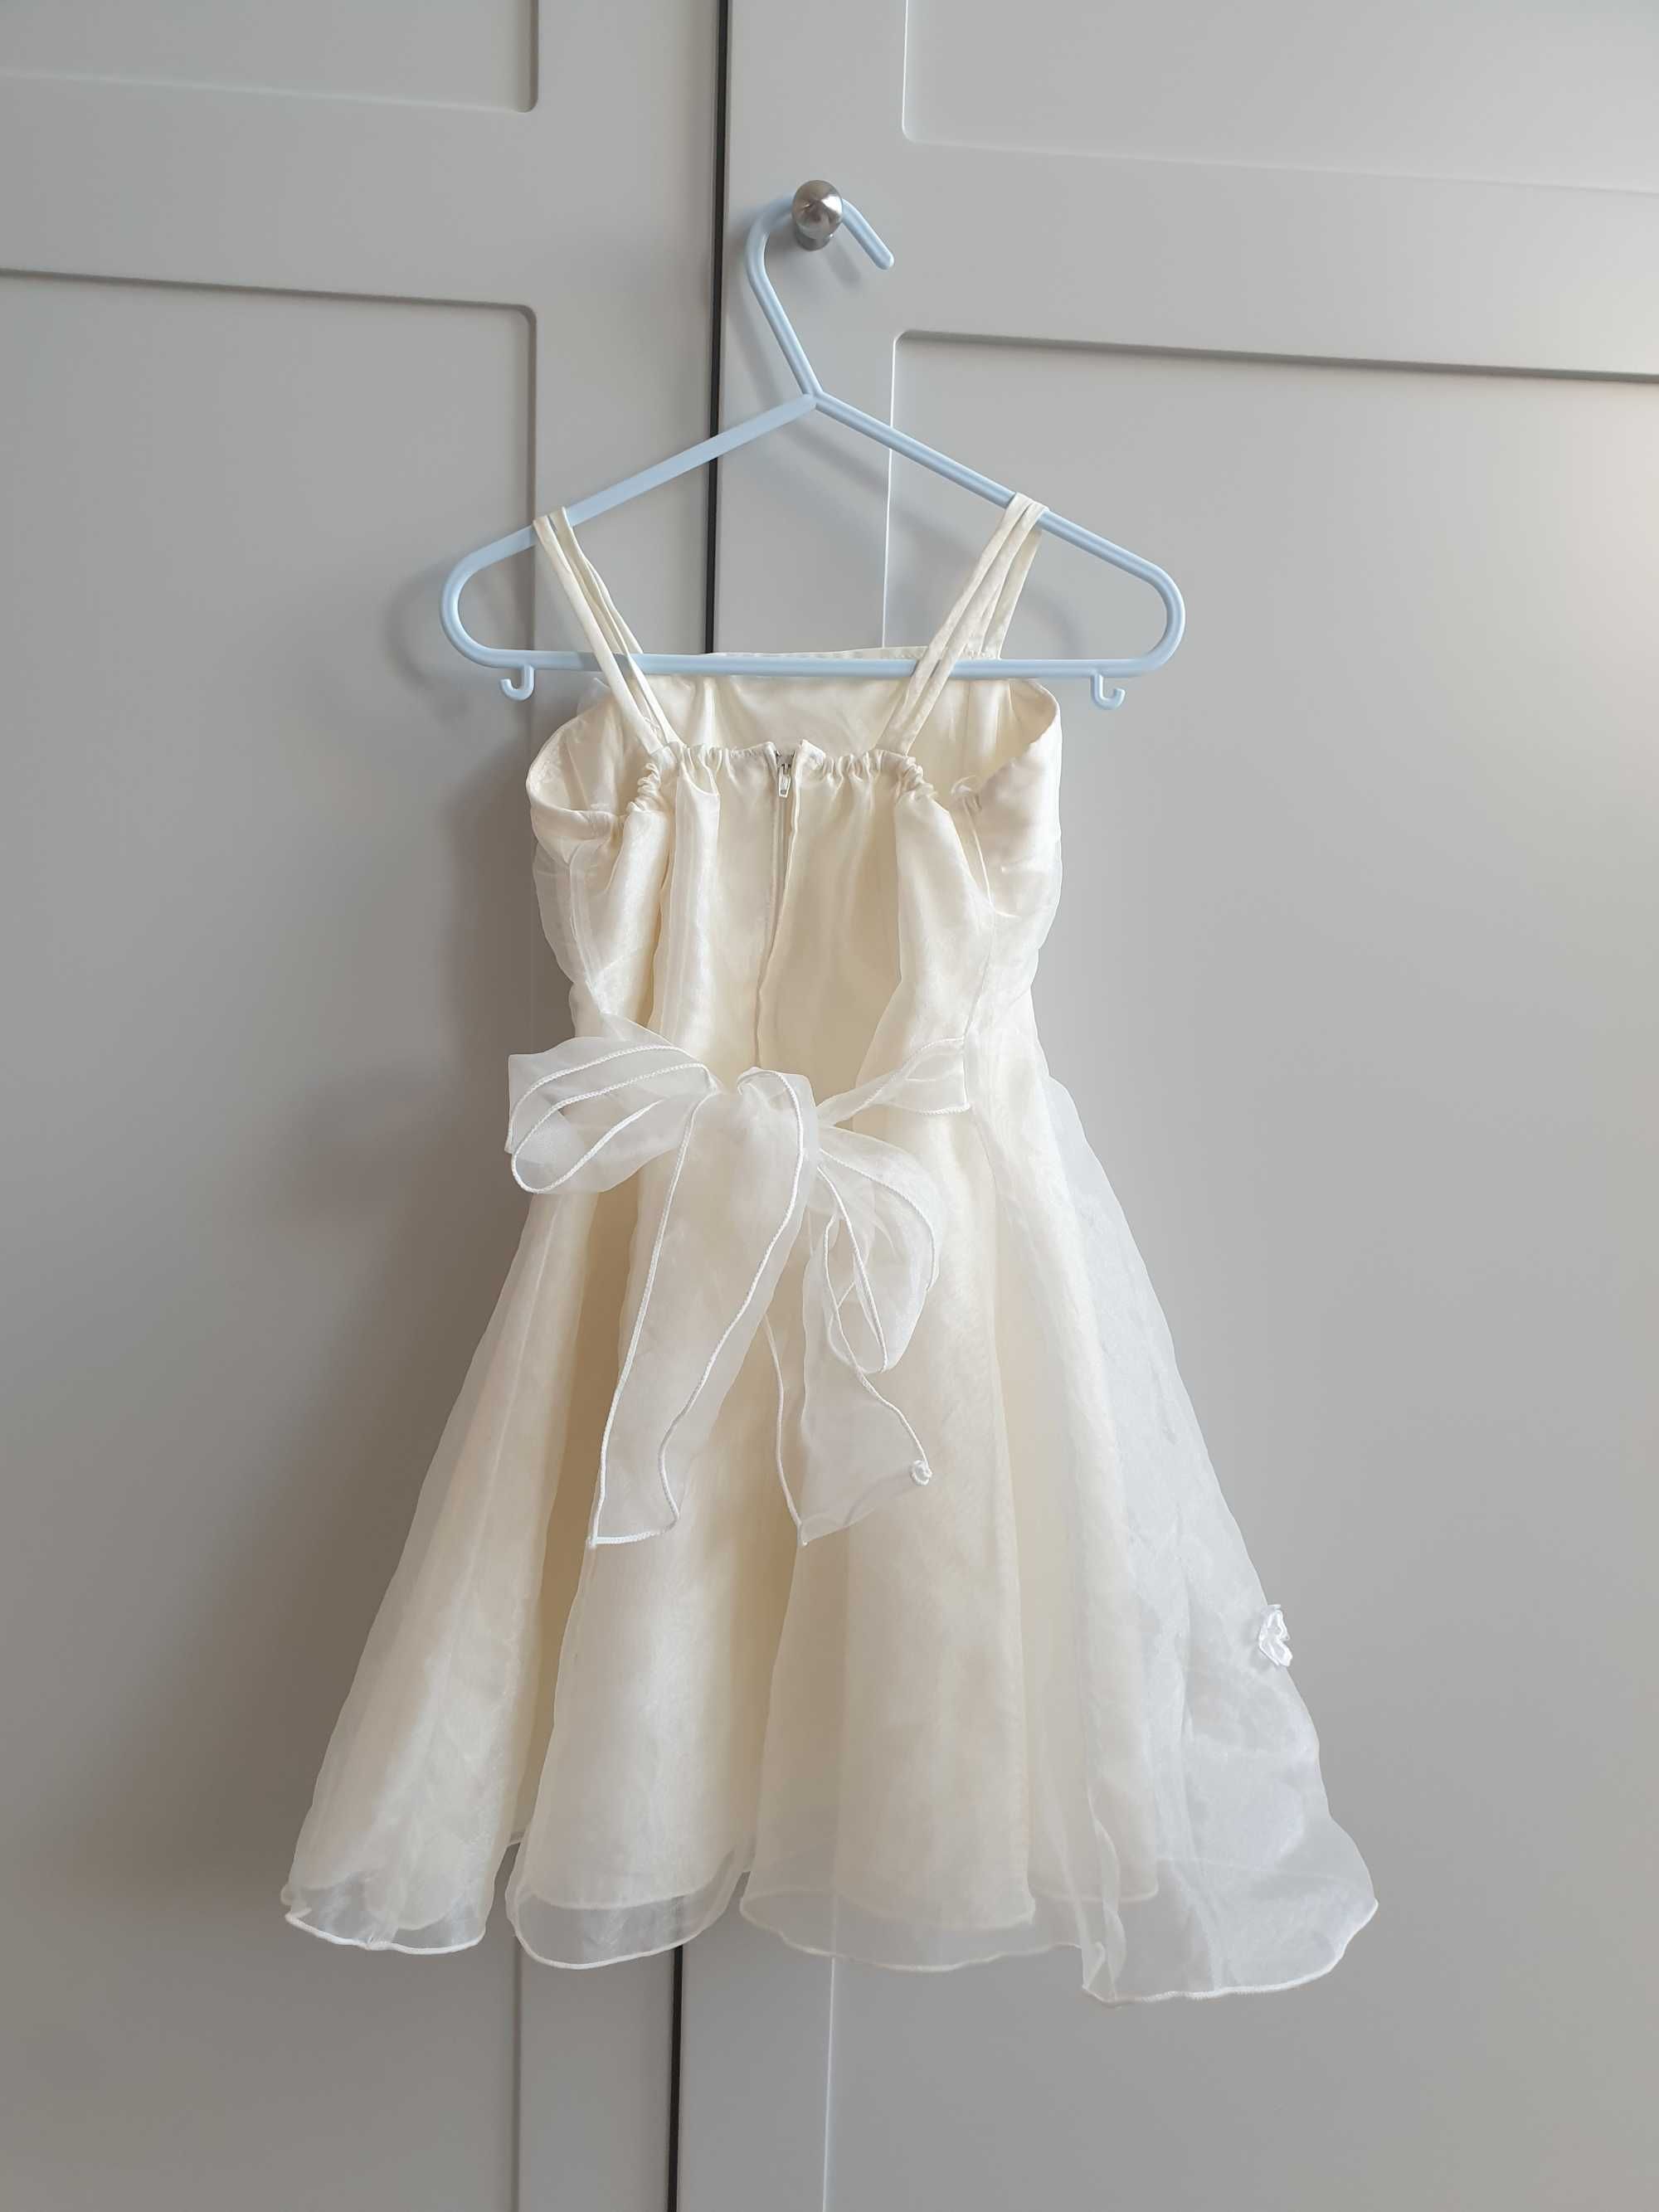 Kremowa sukienka tiulowa haftowana balowa ślub wesele 92 98